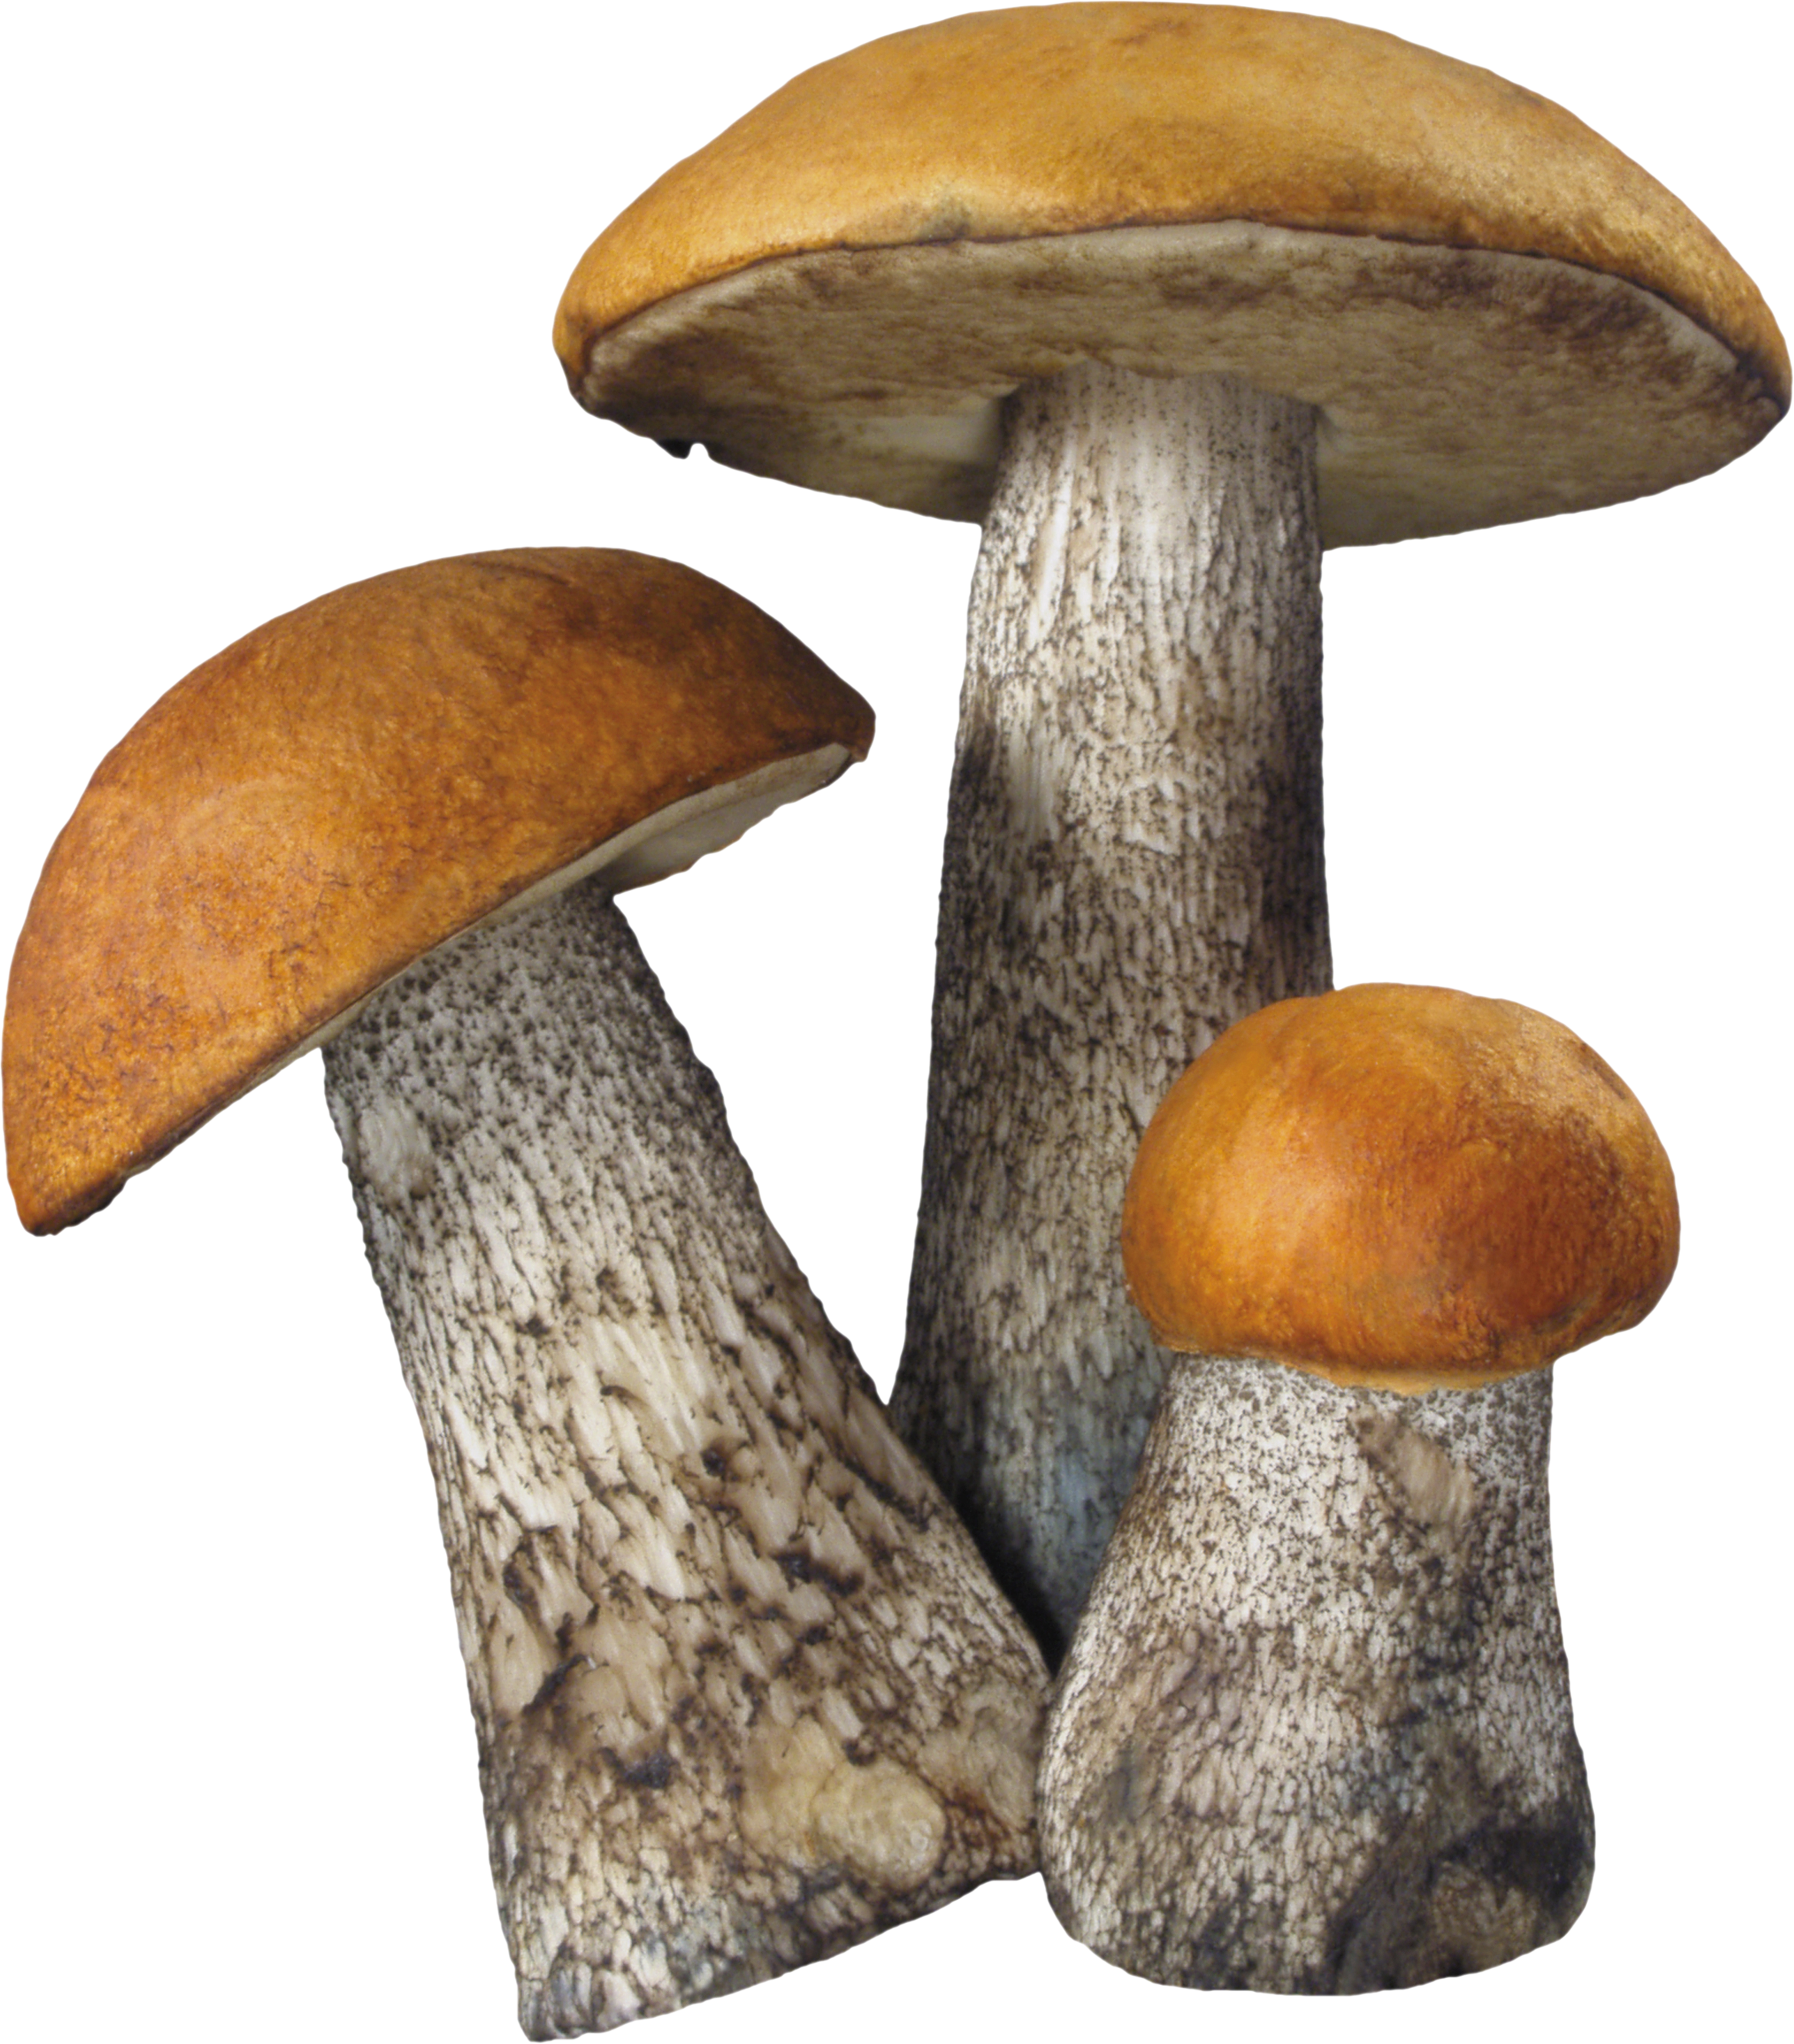 mushrooms Macrolepiota excori